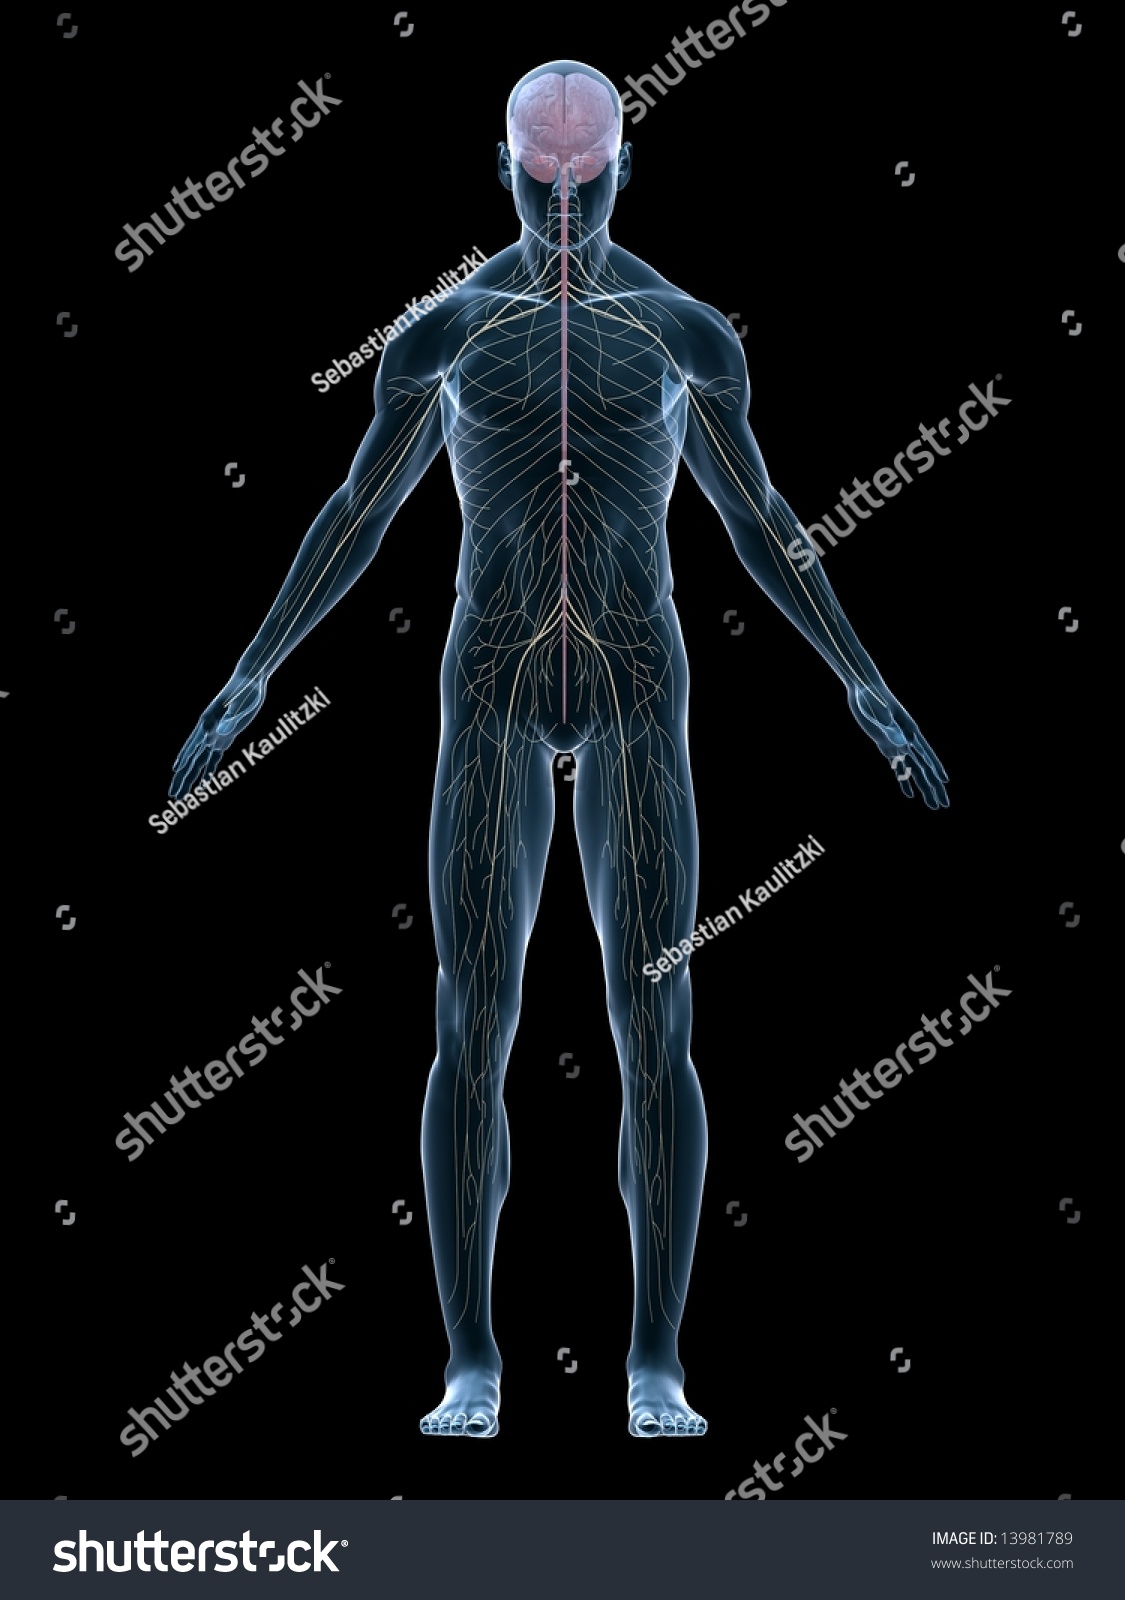 Human Nerve System Stock Photo 13981789 : Shutterstock